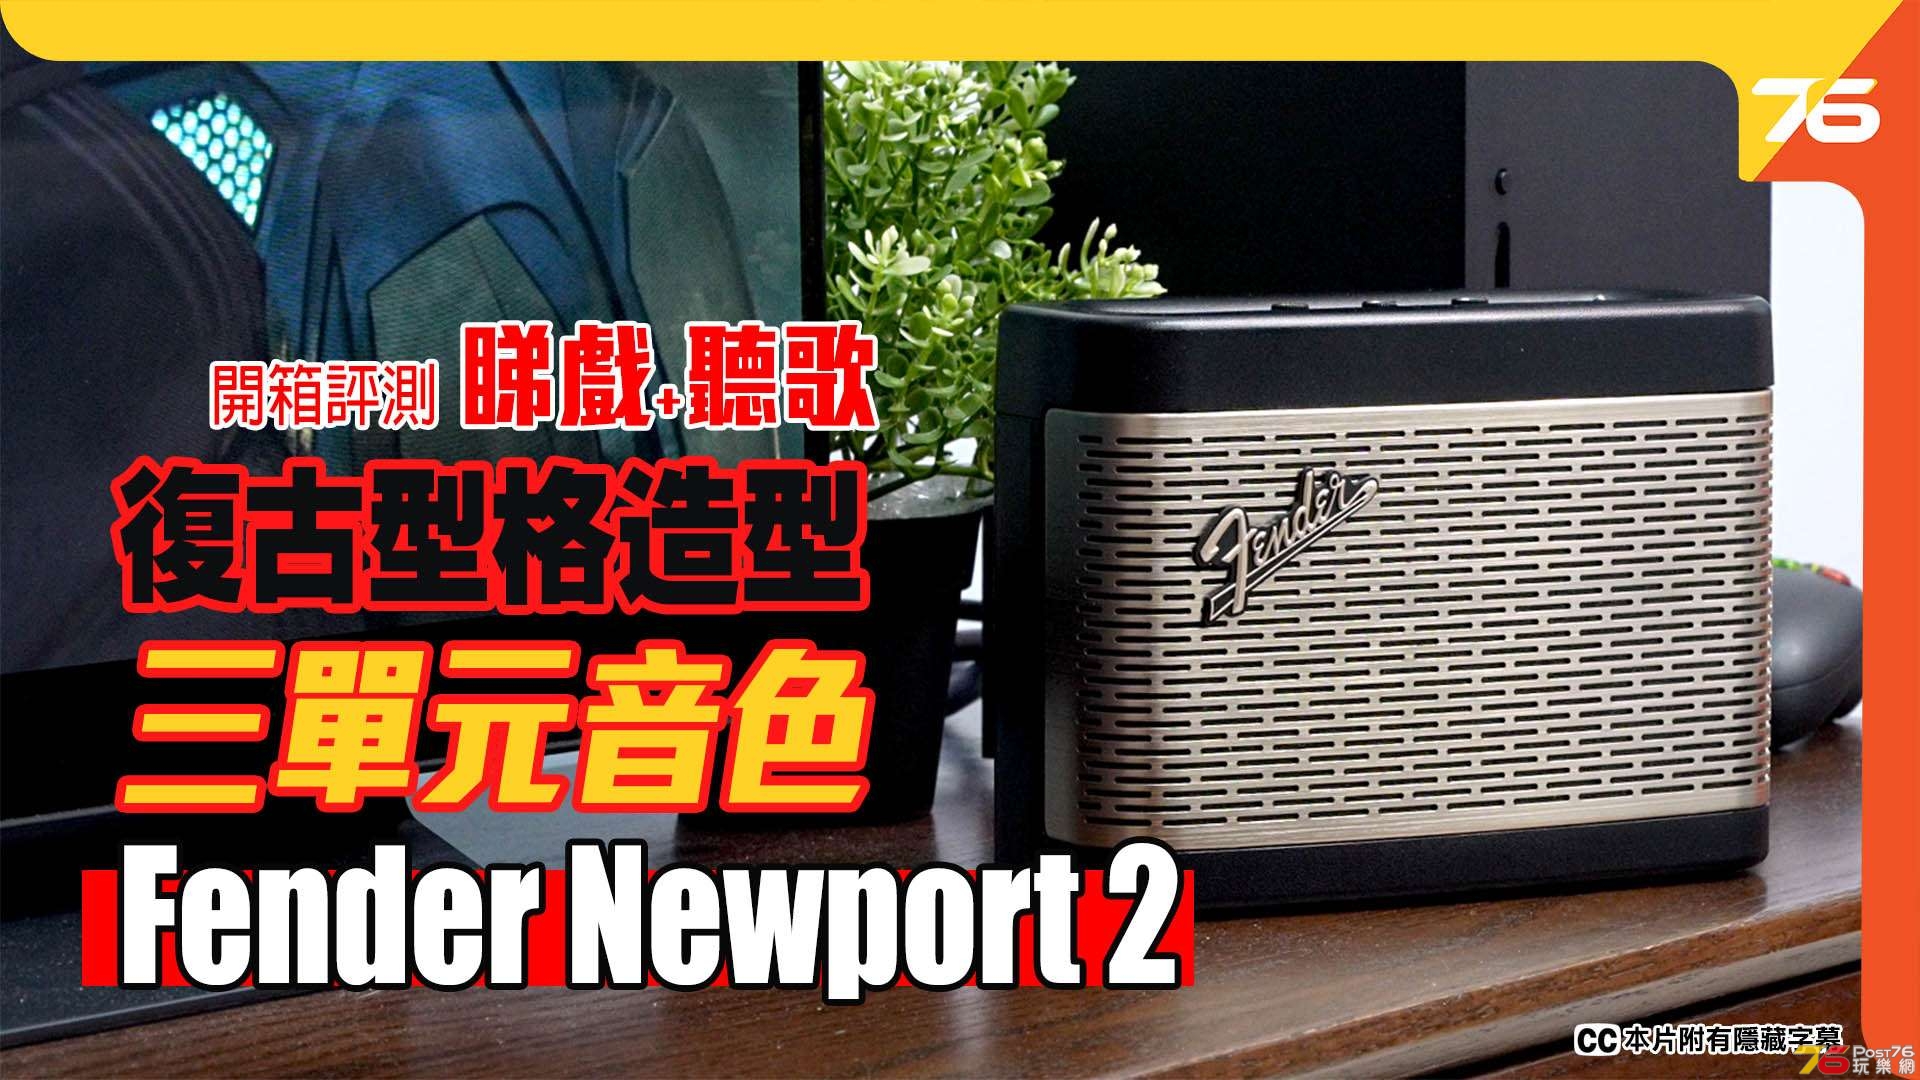 Fender NewPort 2 inbox review yt.jpg